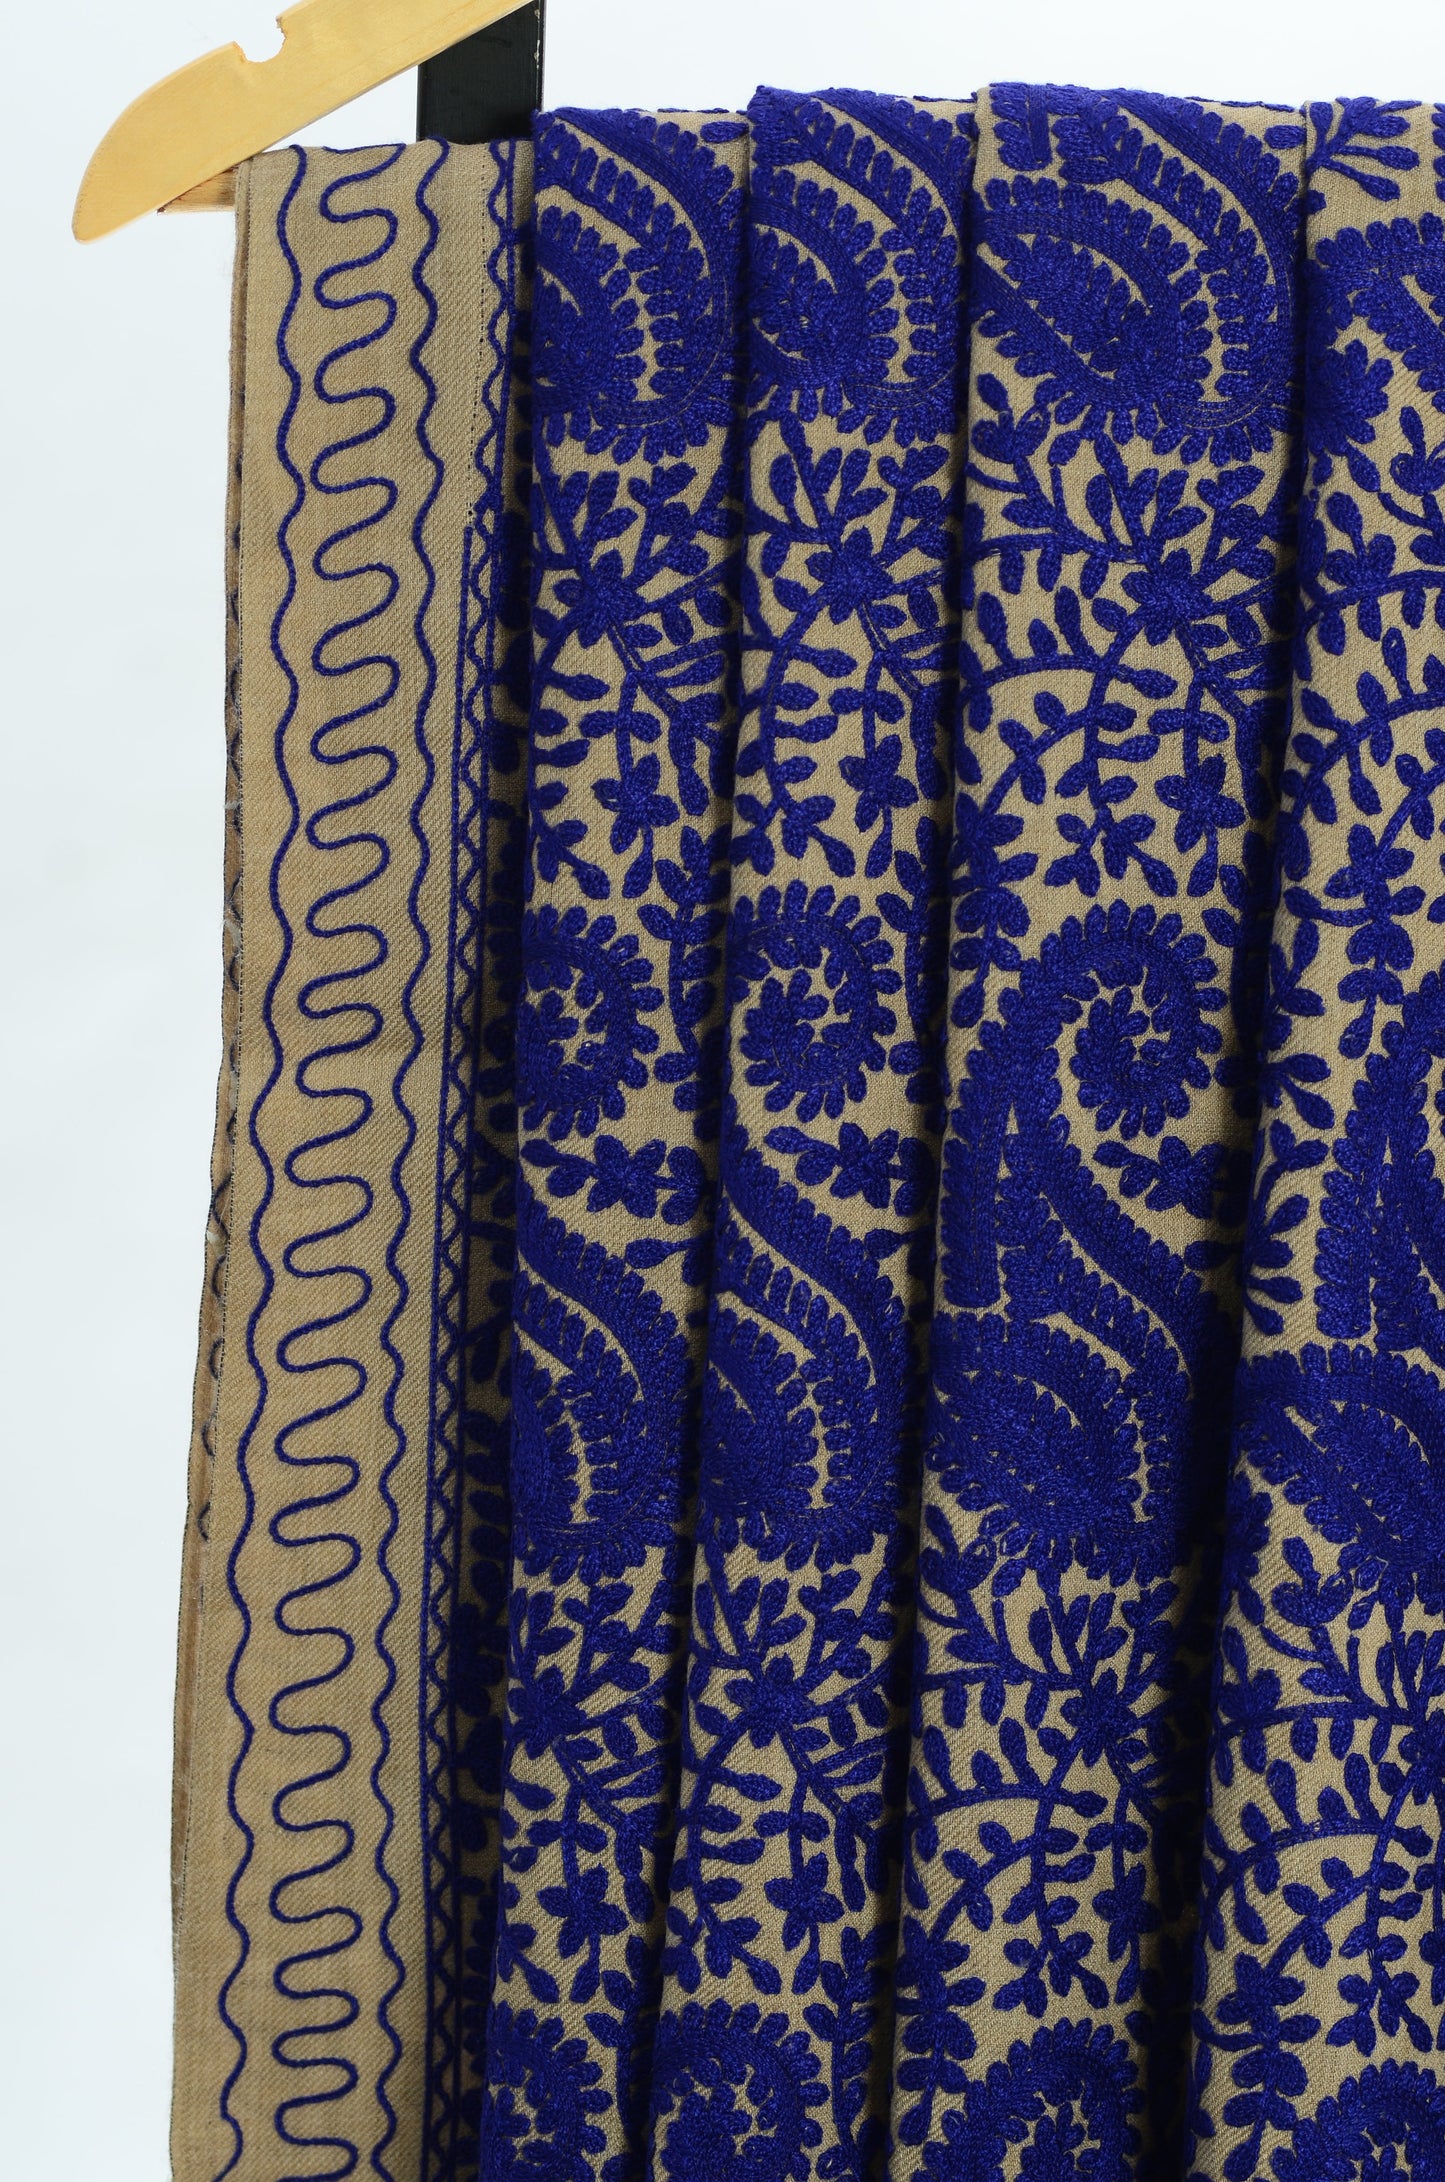 Embroidery Pashmina Shawl Blue